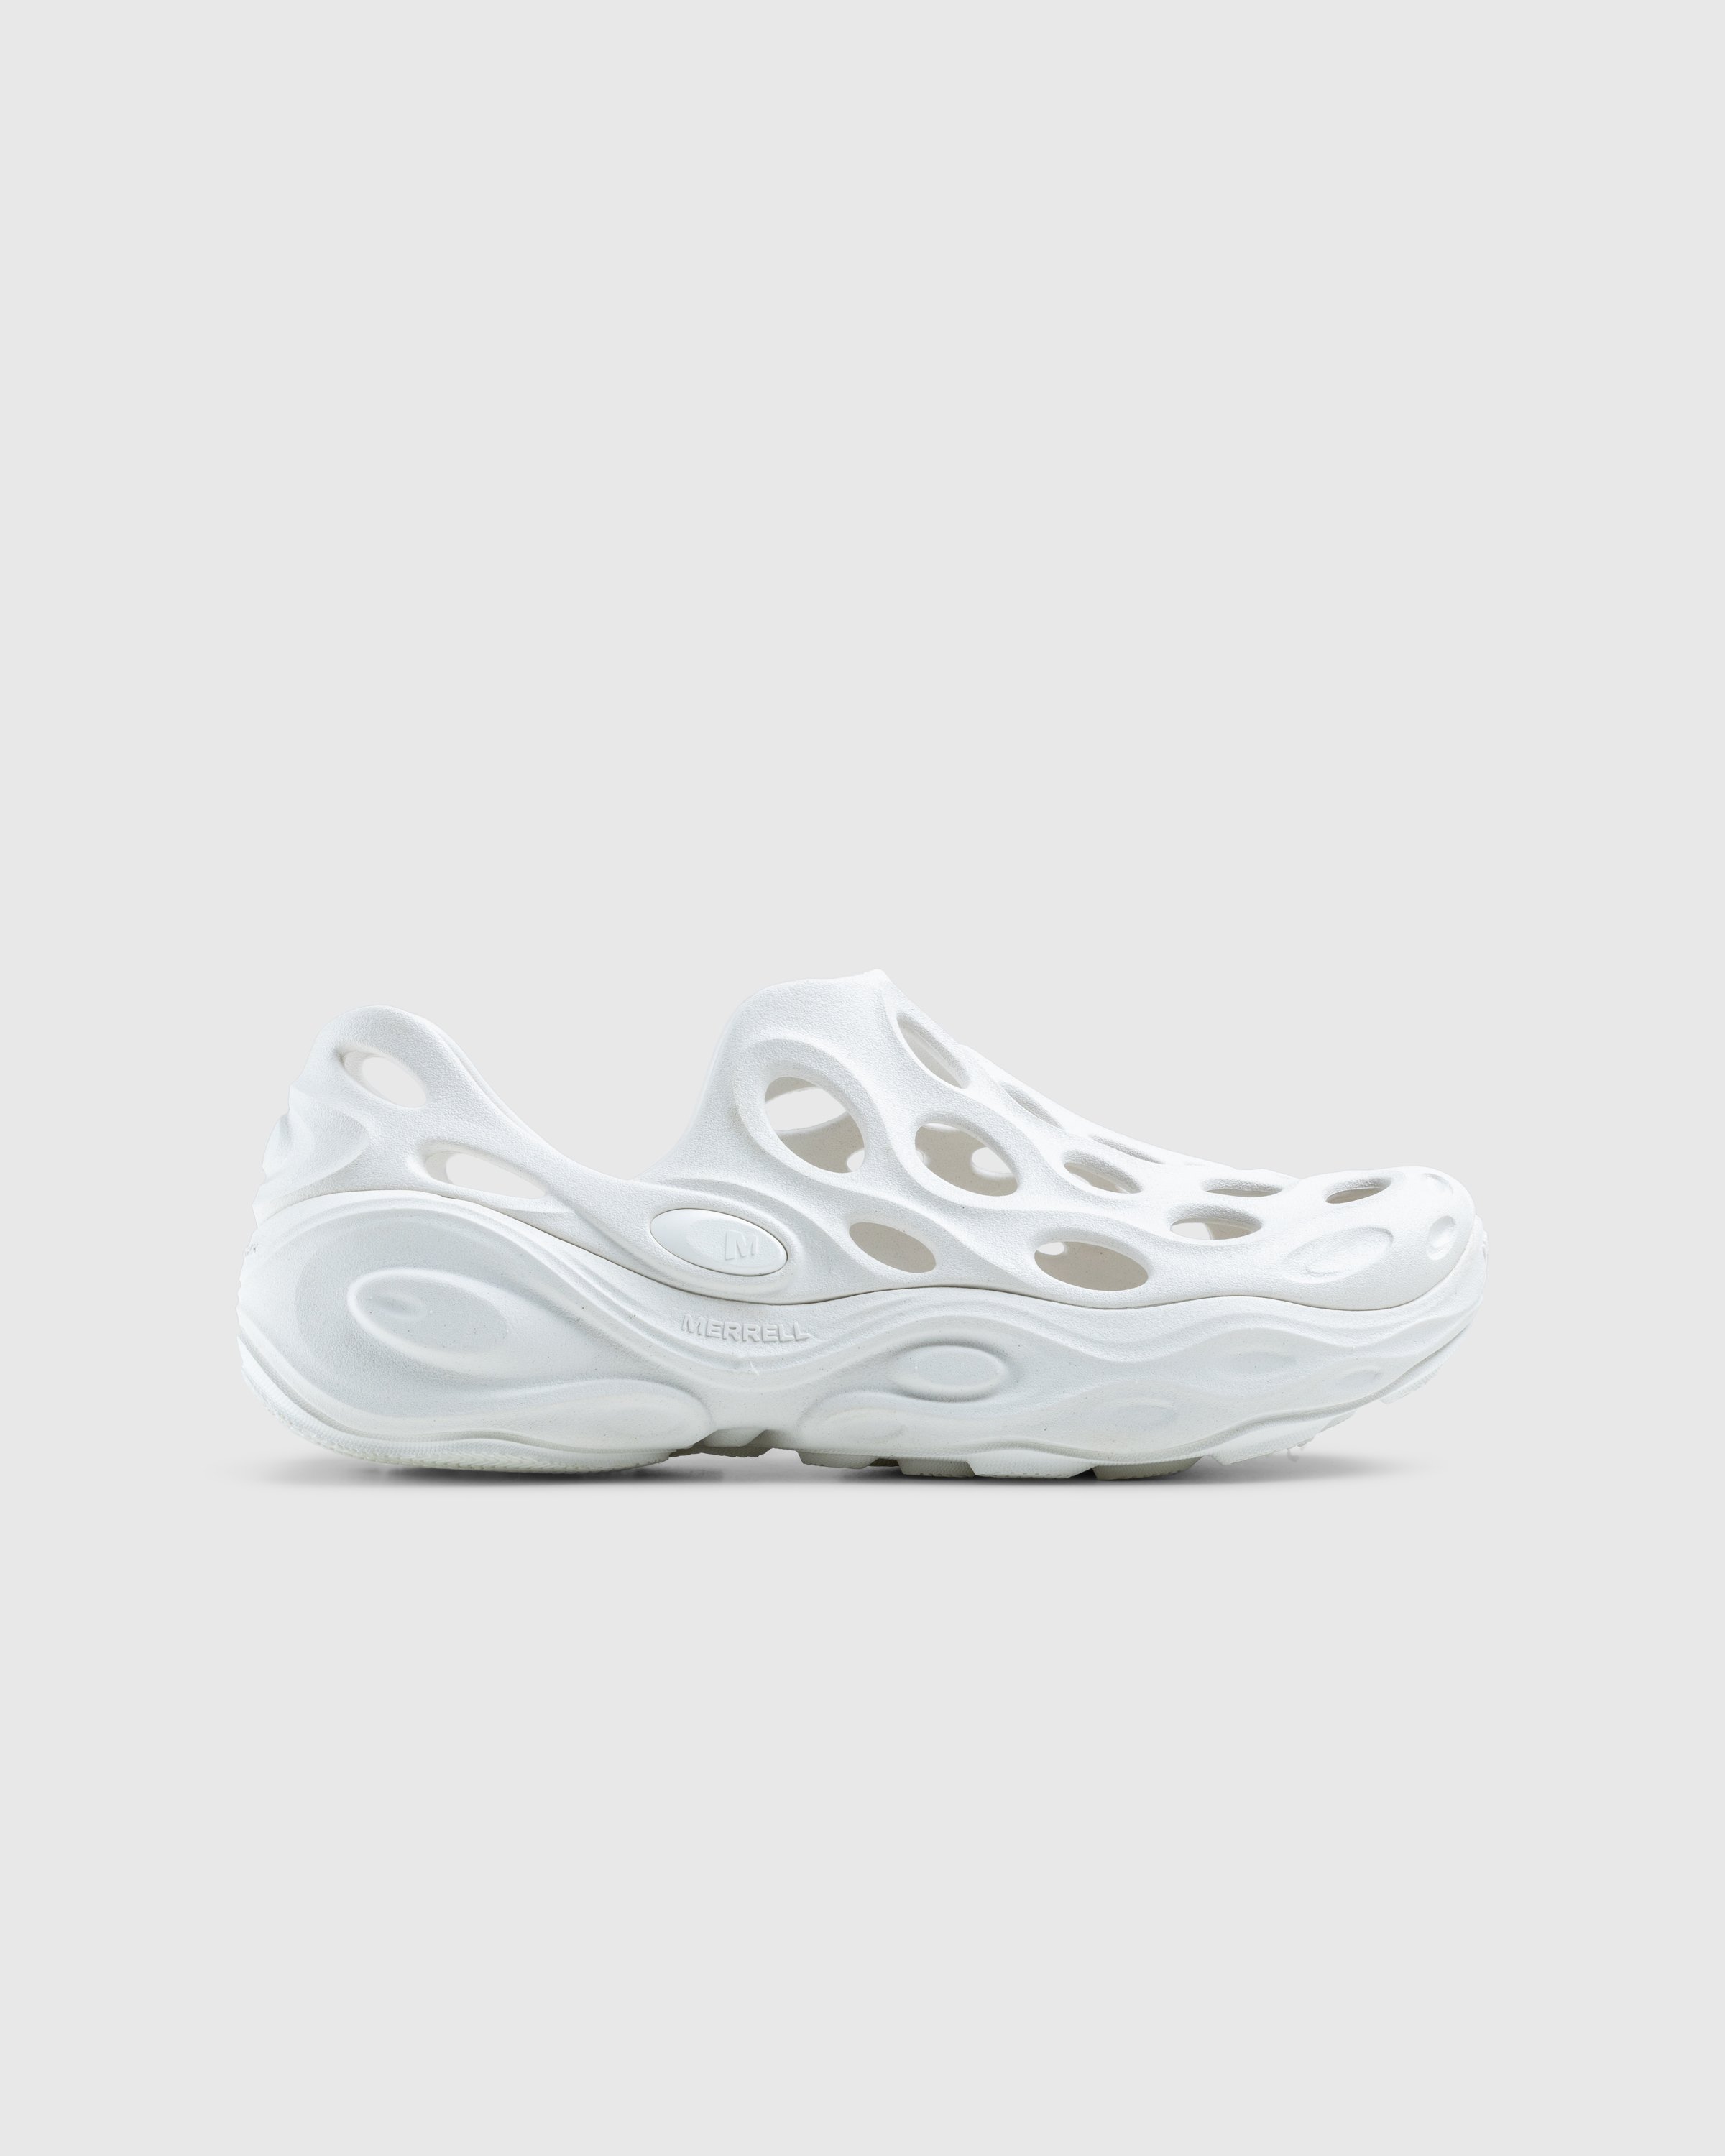 Merrell - HYDRO NEXT GEN MOC SE/TRIPLE WHITE - Footwear - White - Image 1